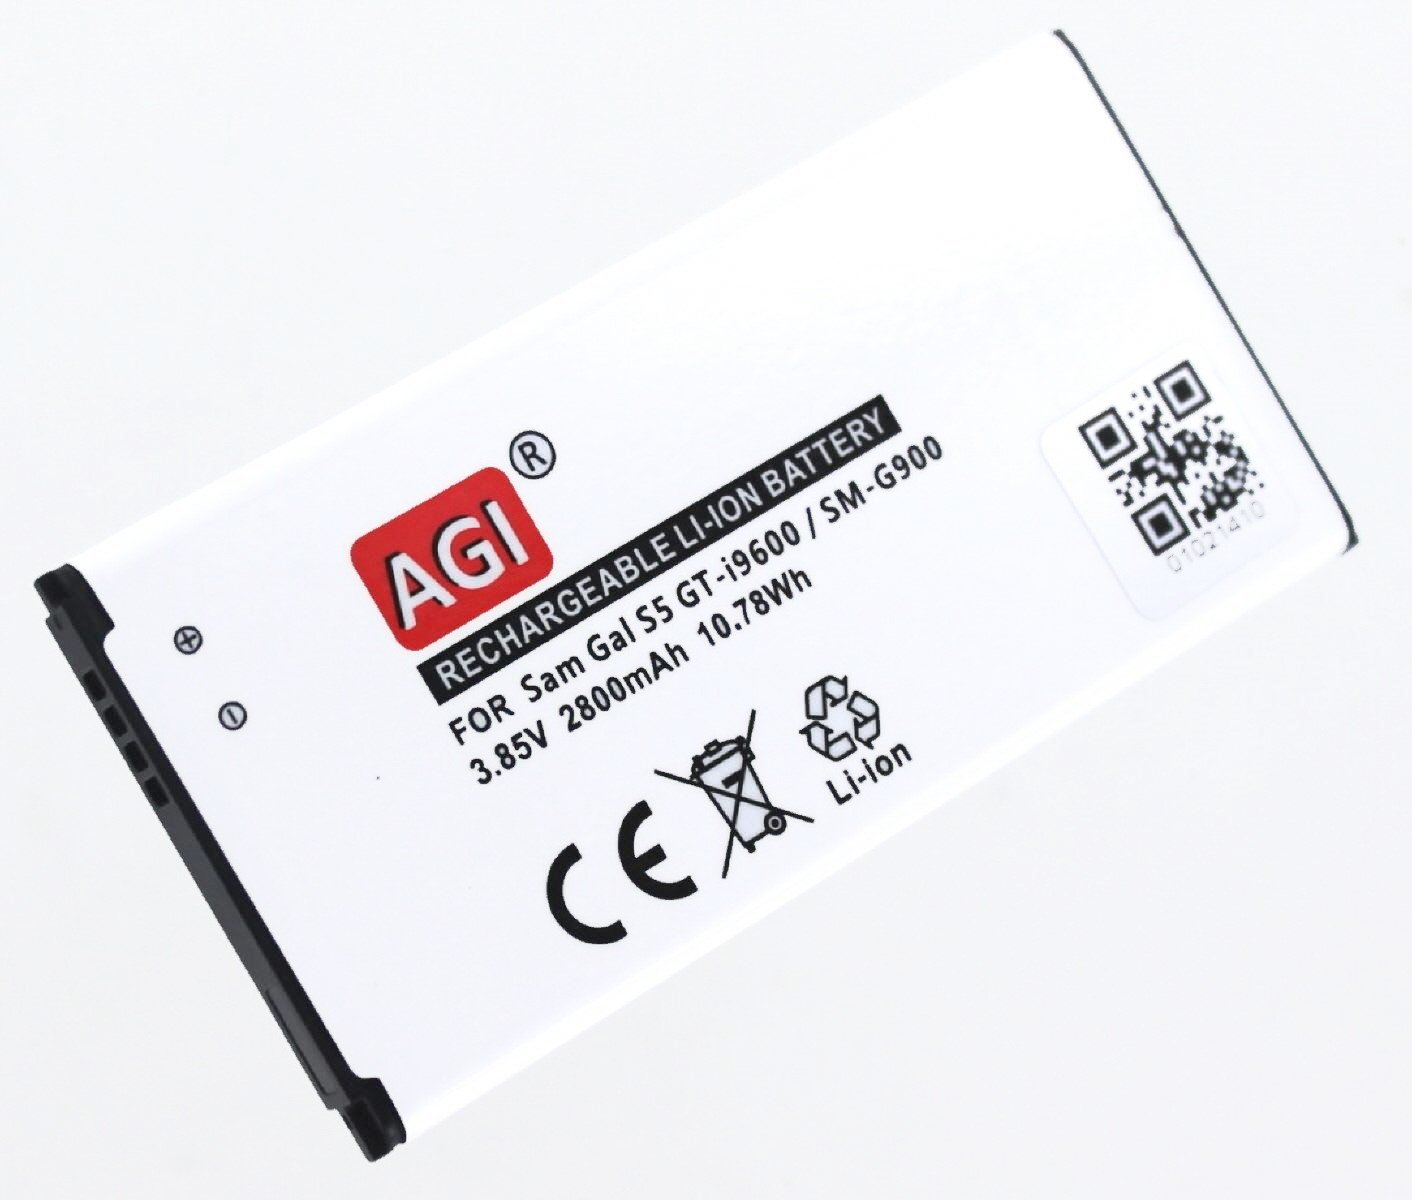 AGI Akku SM-G910S Samsung mAh Handy-/Smartphoneakku, Volt, mit Li-Ion kompatibel 2800 3.85